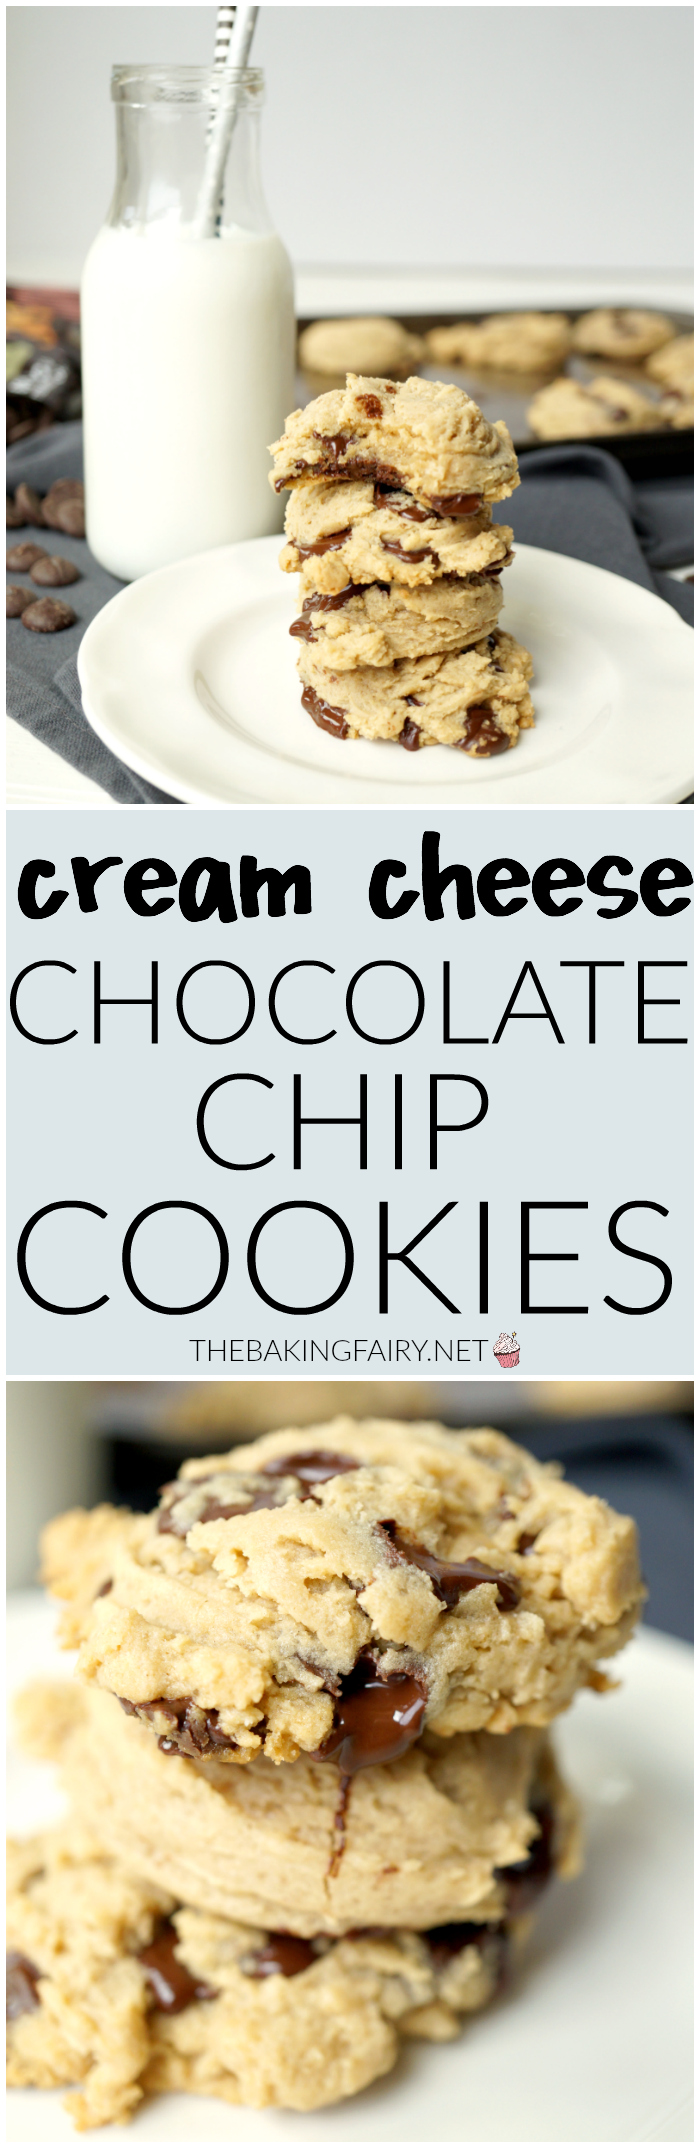 cream cheese chocolate chip cookies | The Baking Fairy